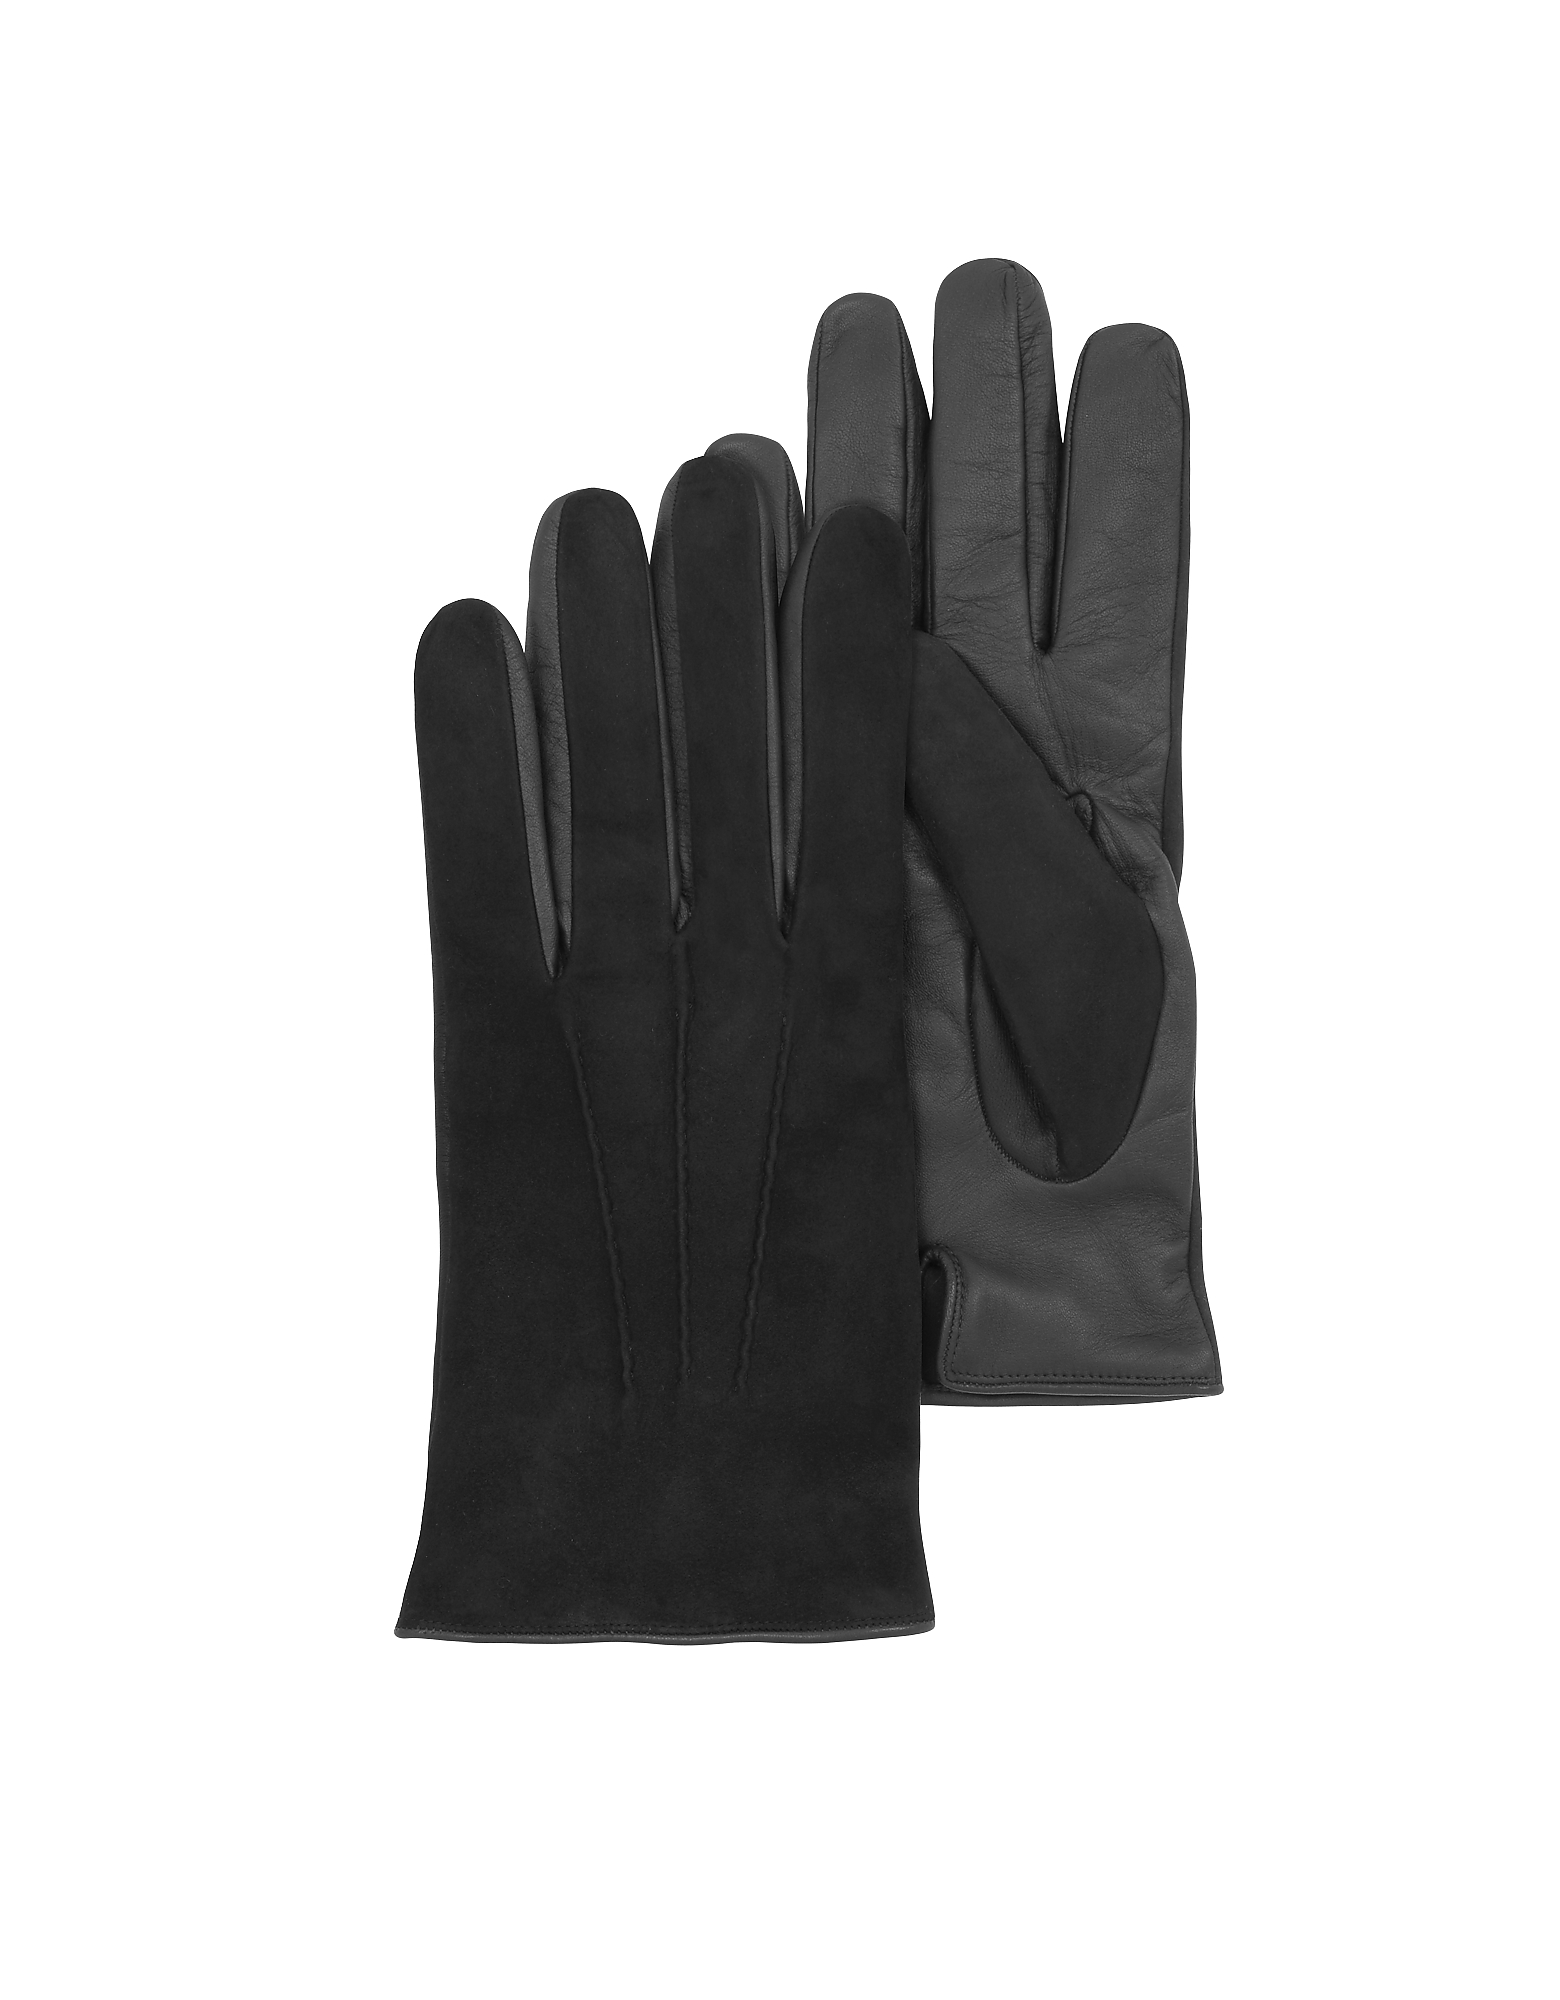 Forzieri Men's Gloves Black Touch Screen Leather Men's Gloves